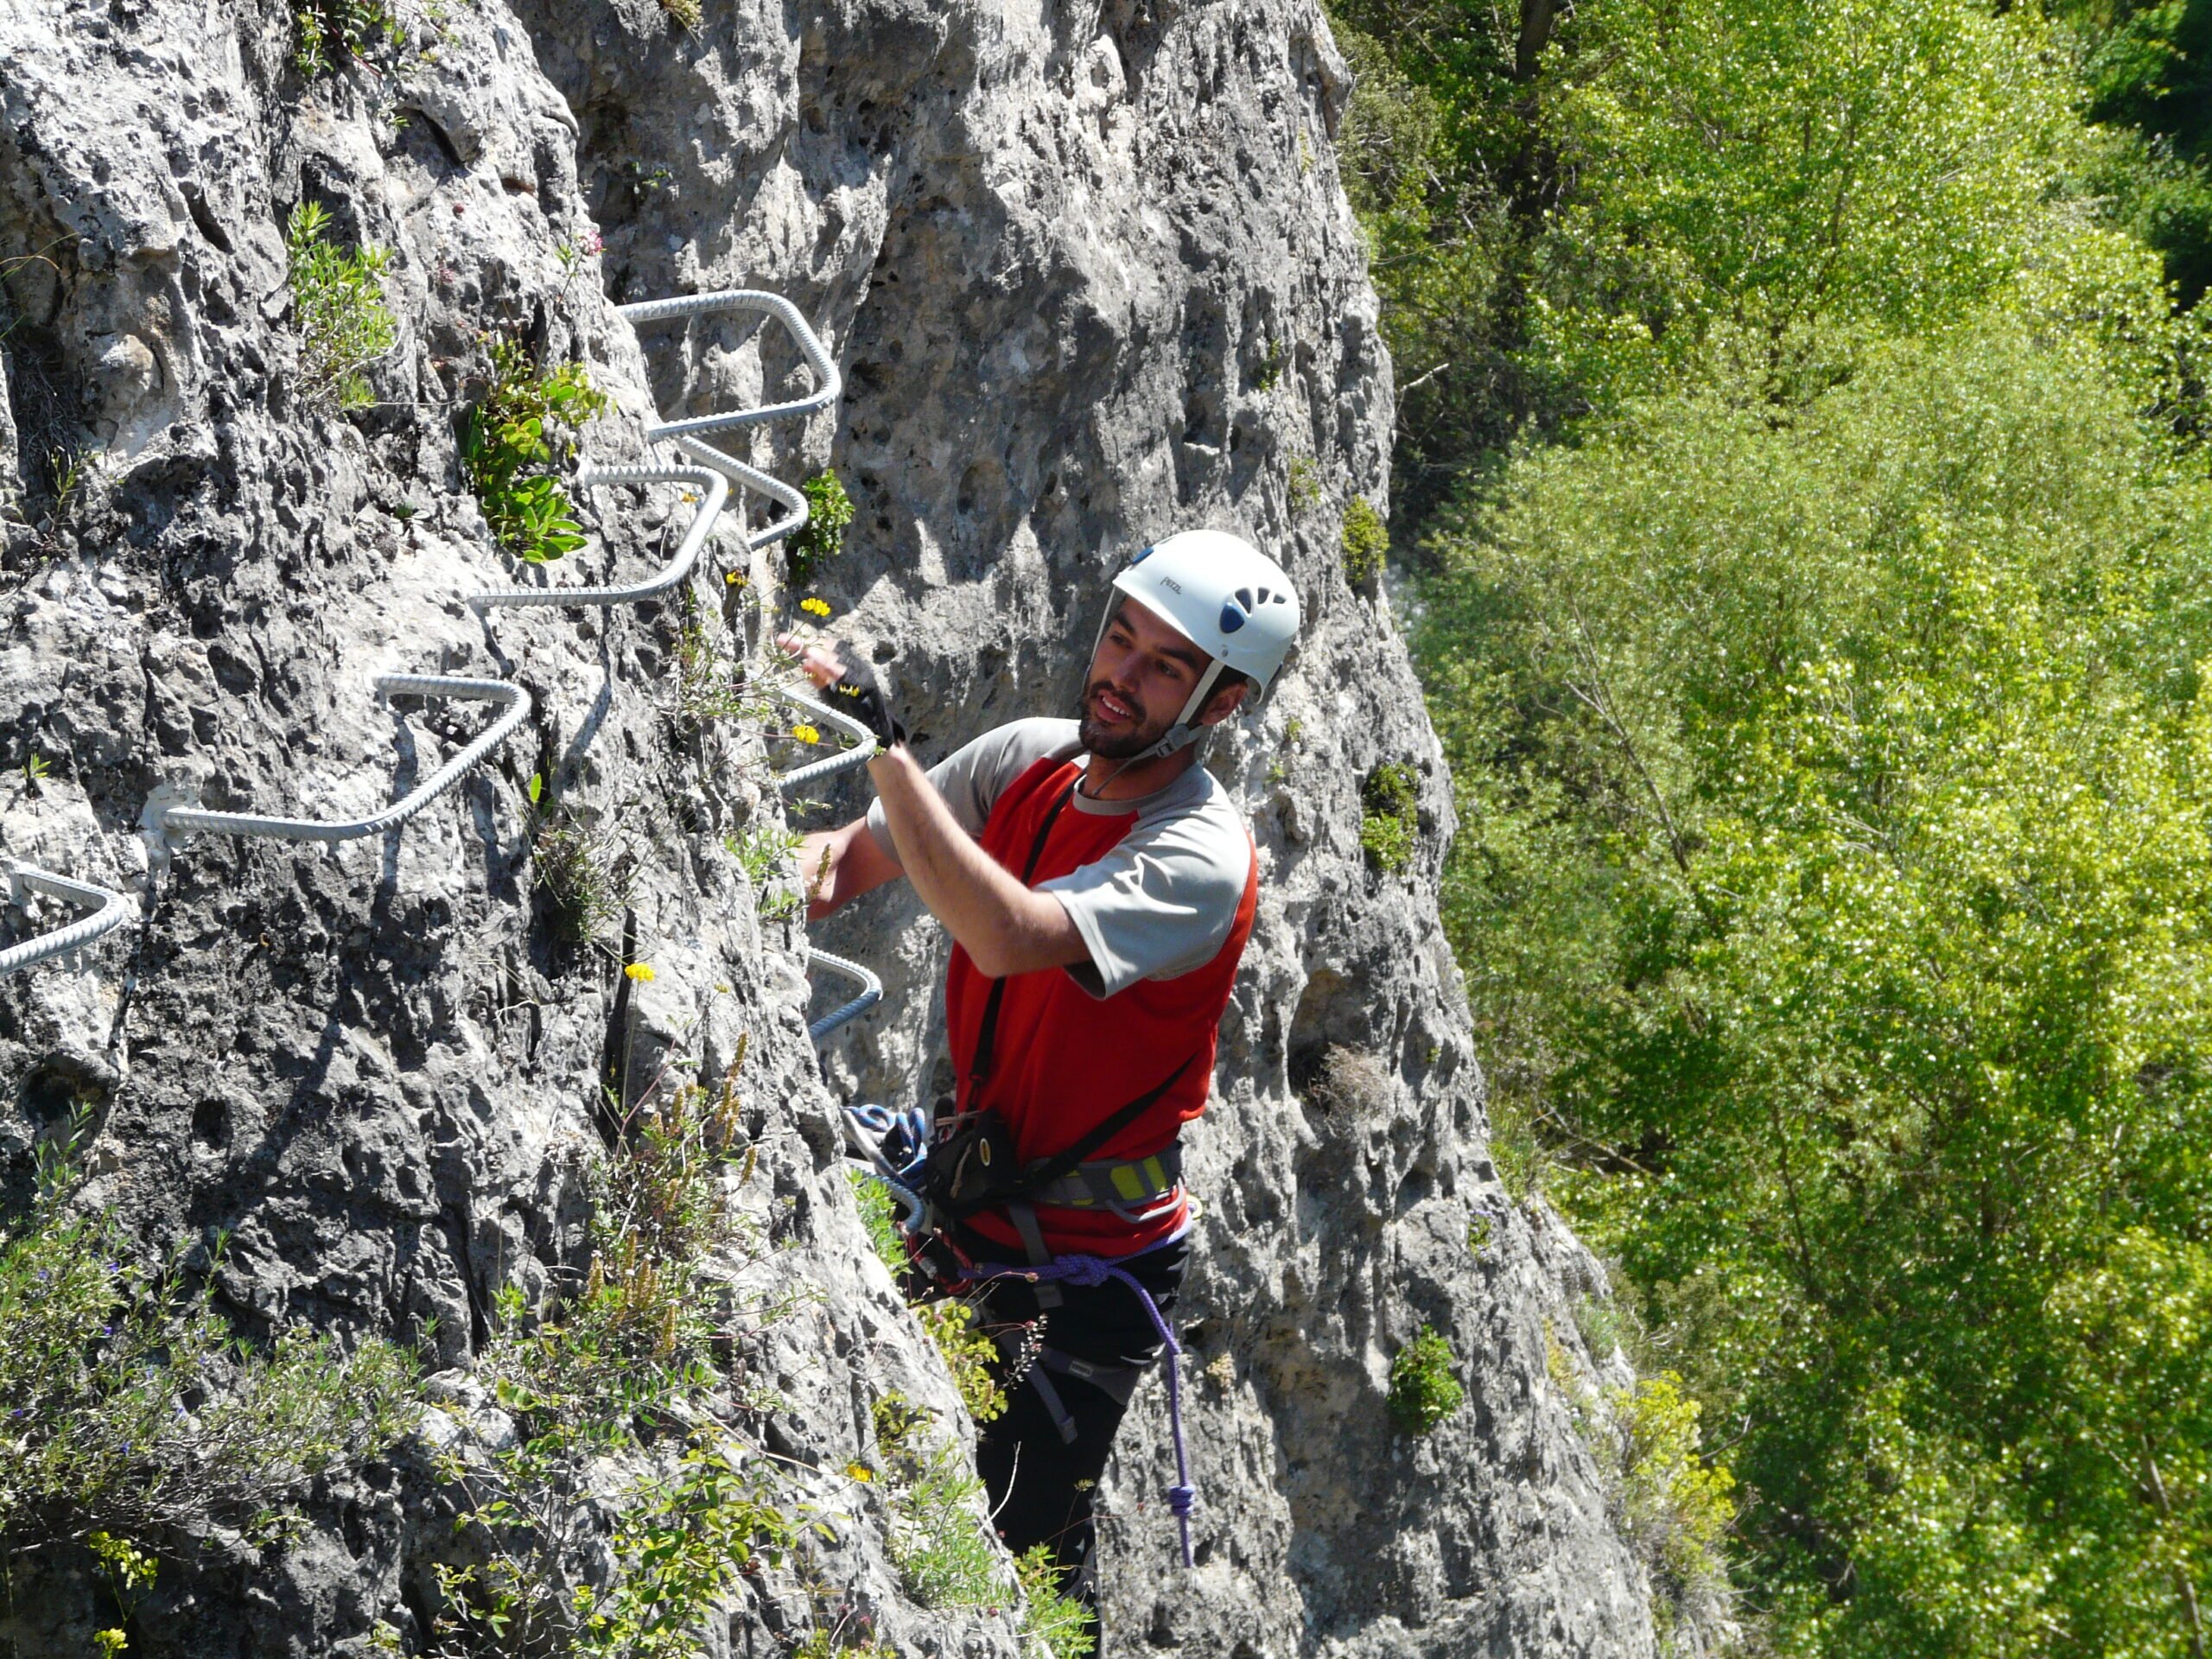 A Vertical Climb And Traverse Along The Limestone Walls Of The Hoz De Priego, In Our Via Ferrata Adventure Tour In Cuenca